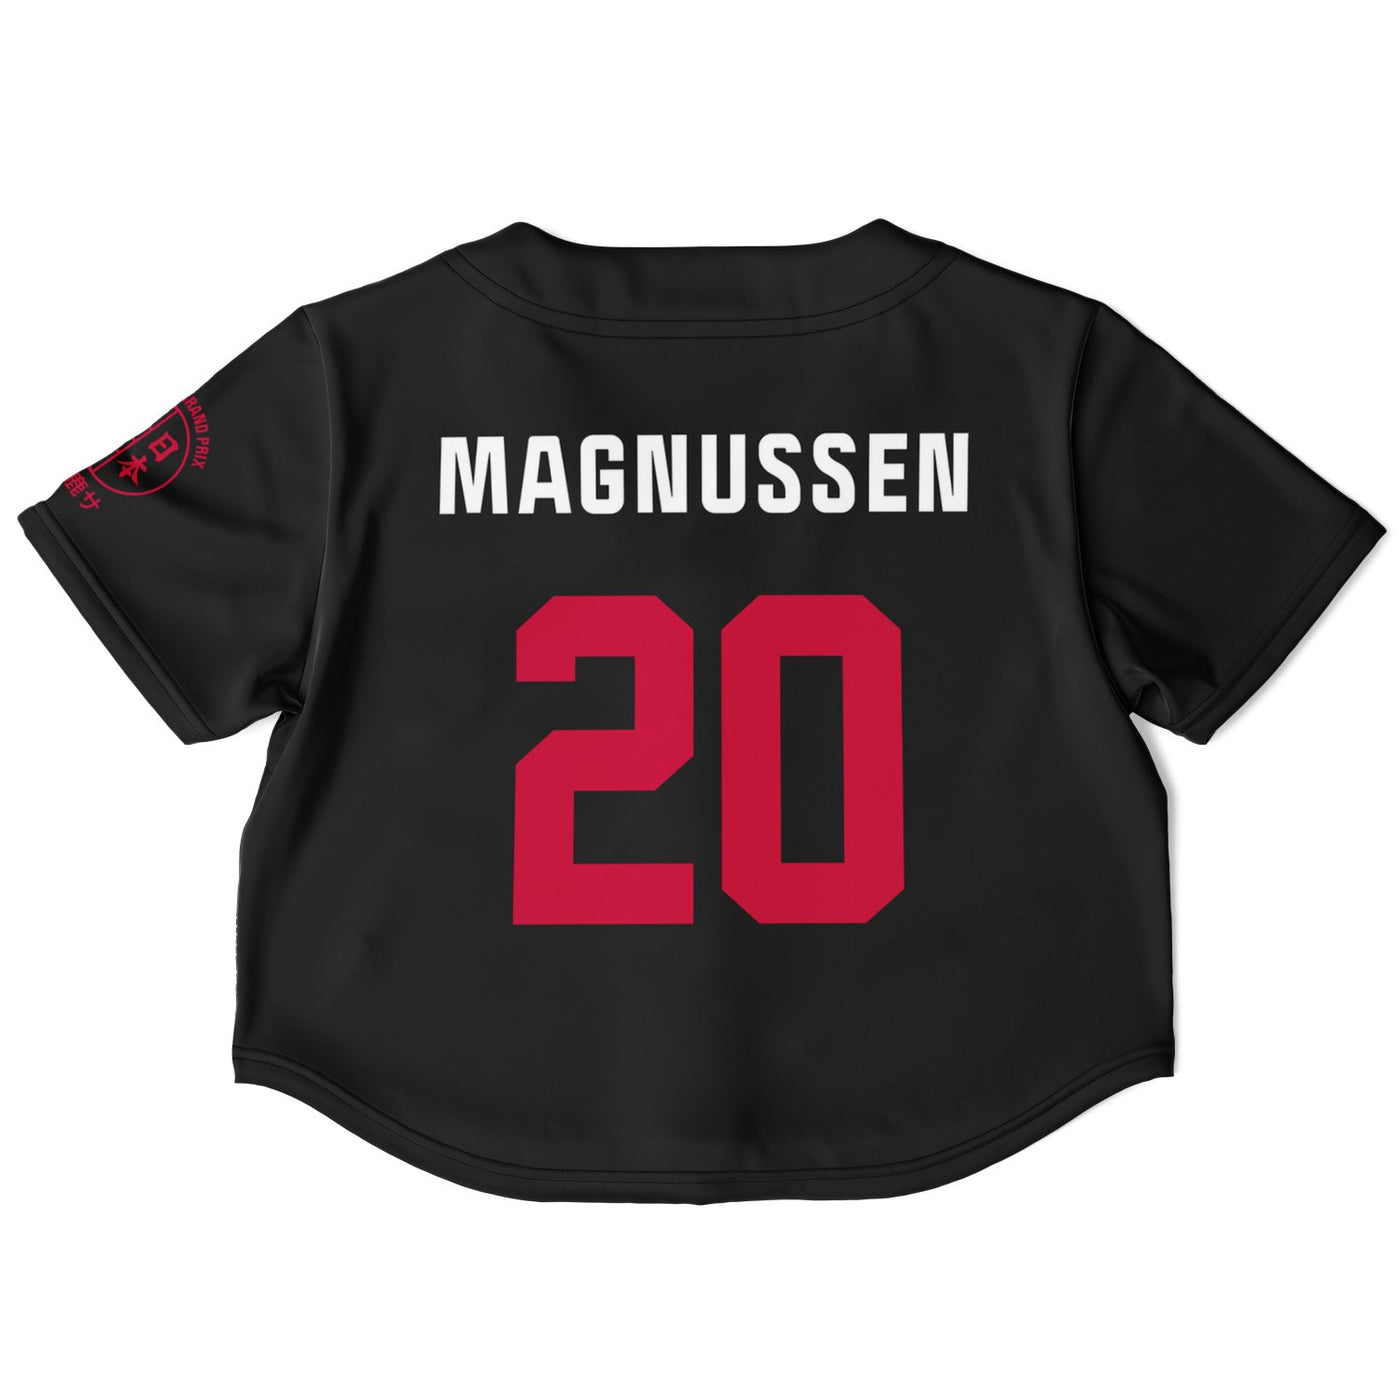 Magnussen - Carbon Black Suzuka "Great Wave" Crop Top - Furious Motorsport